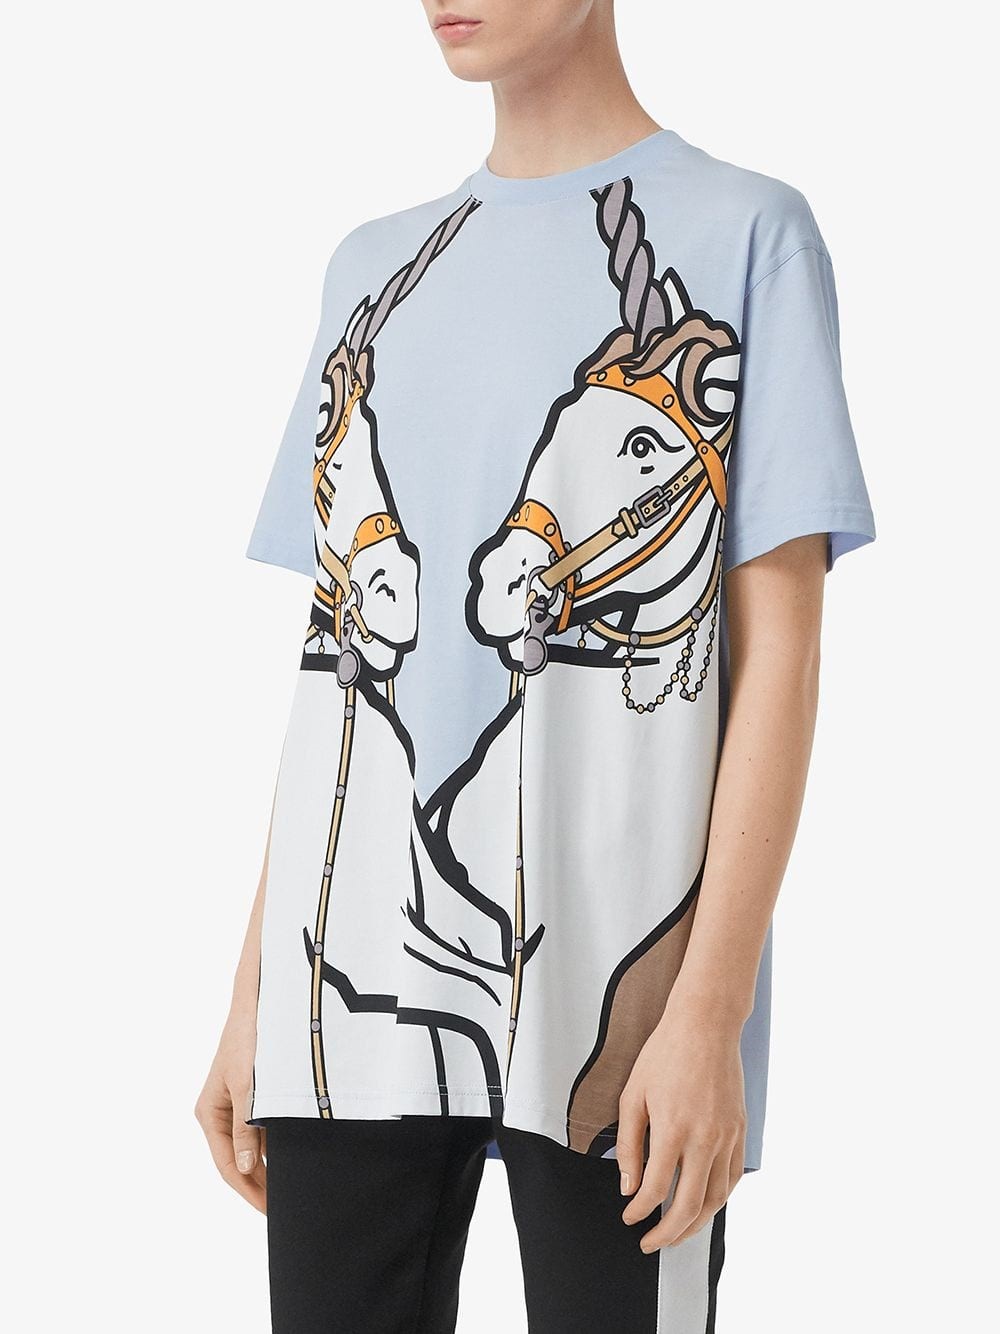 burberry unicorn shirt